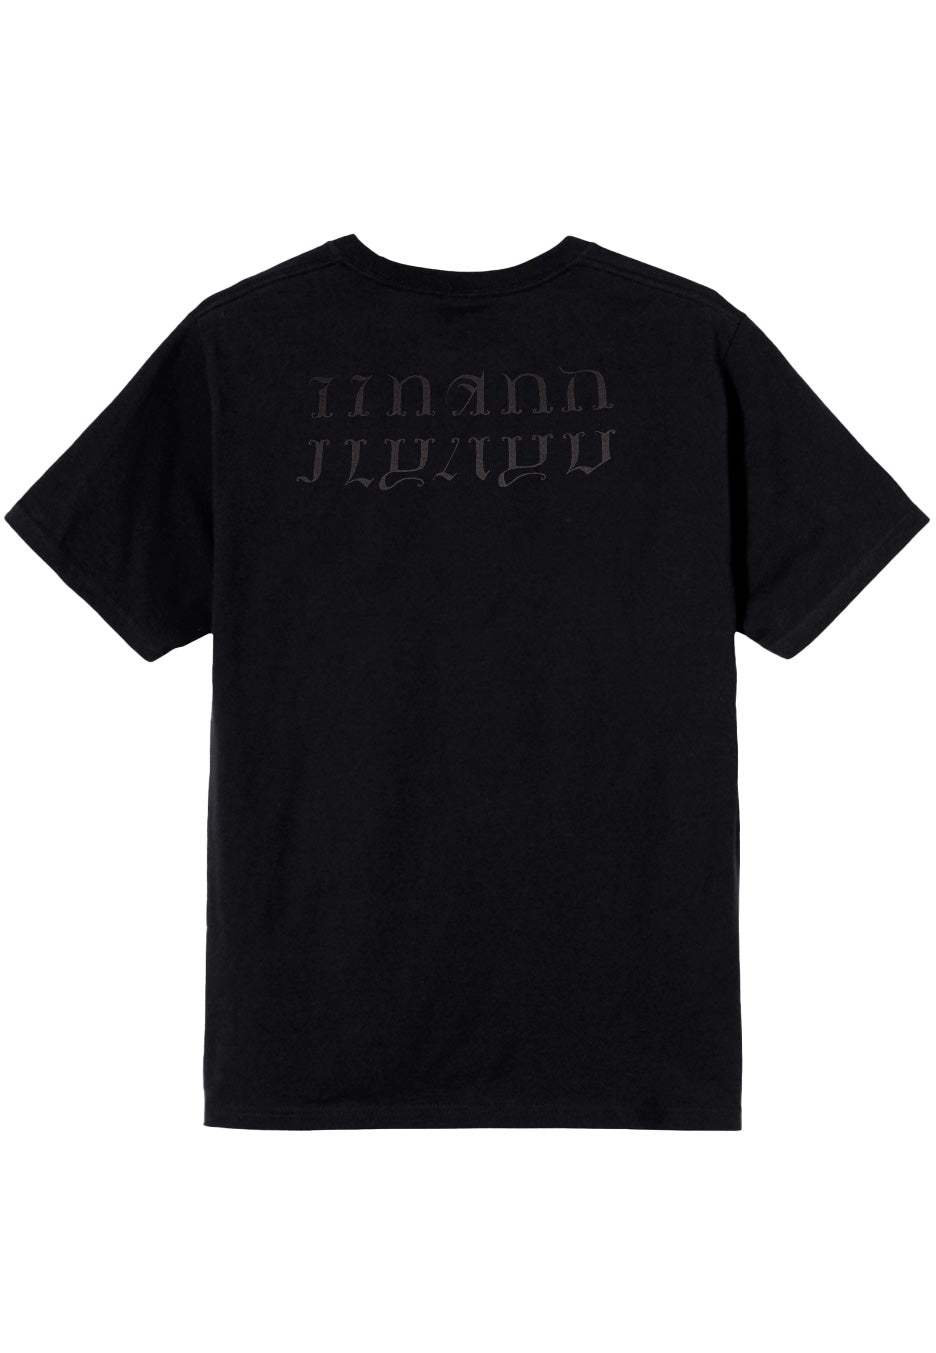 Behemoth - LCFR Cross - T-Shirt